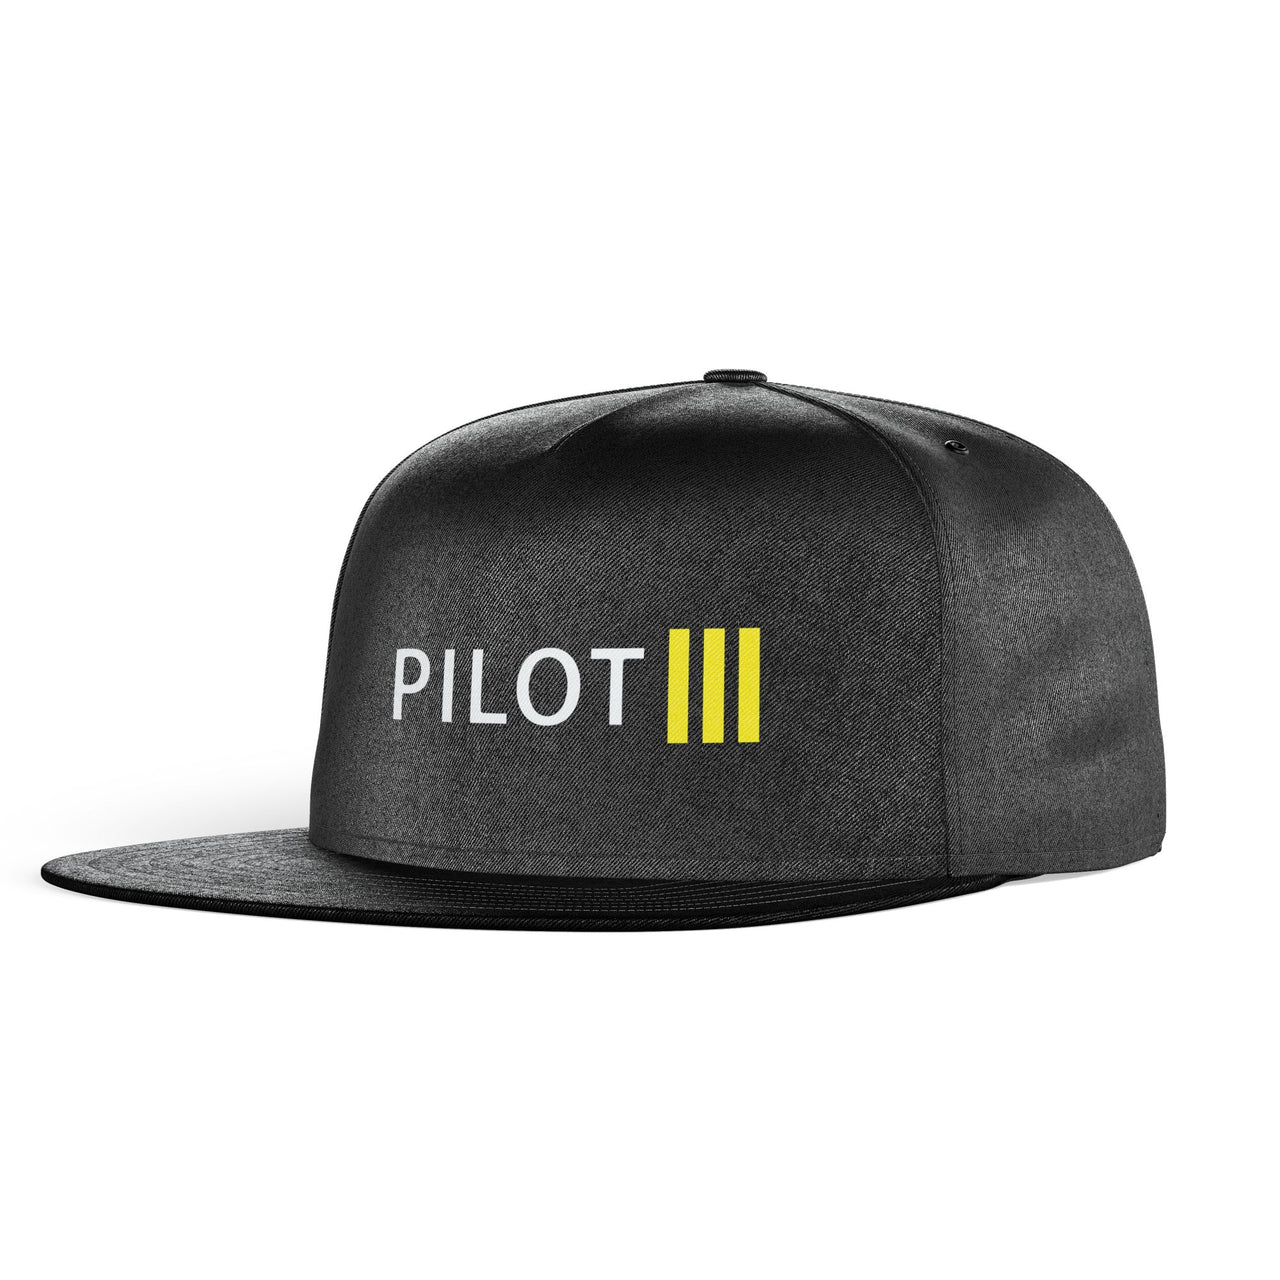 Pilot & Stripes (3 Lines) Designed Snapback Caps & Hats